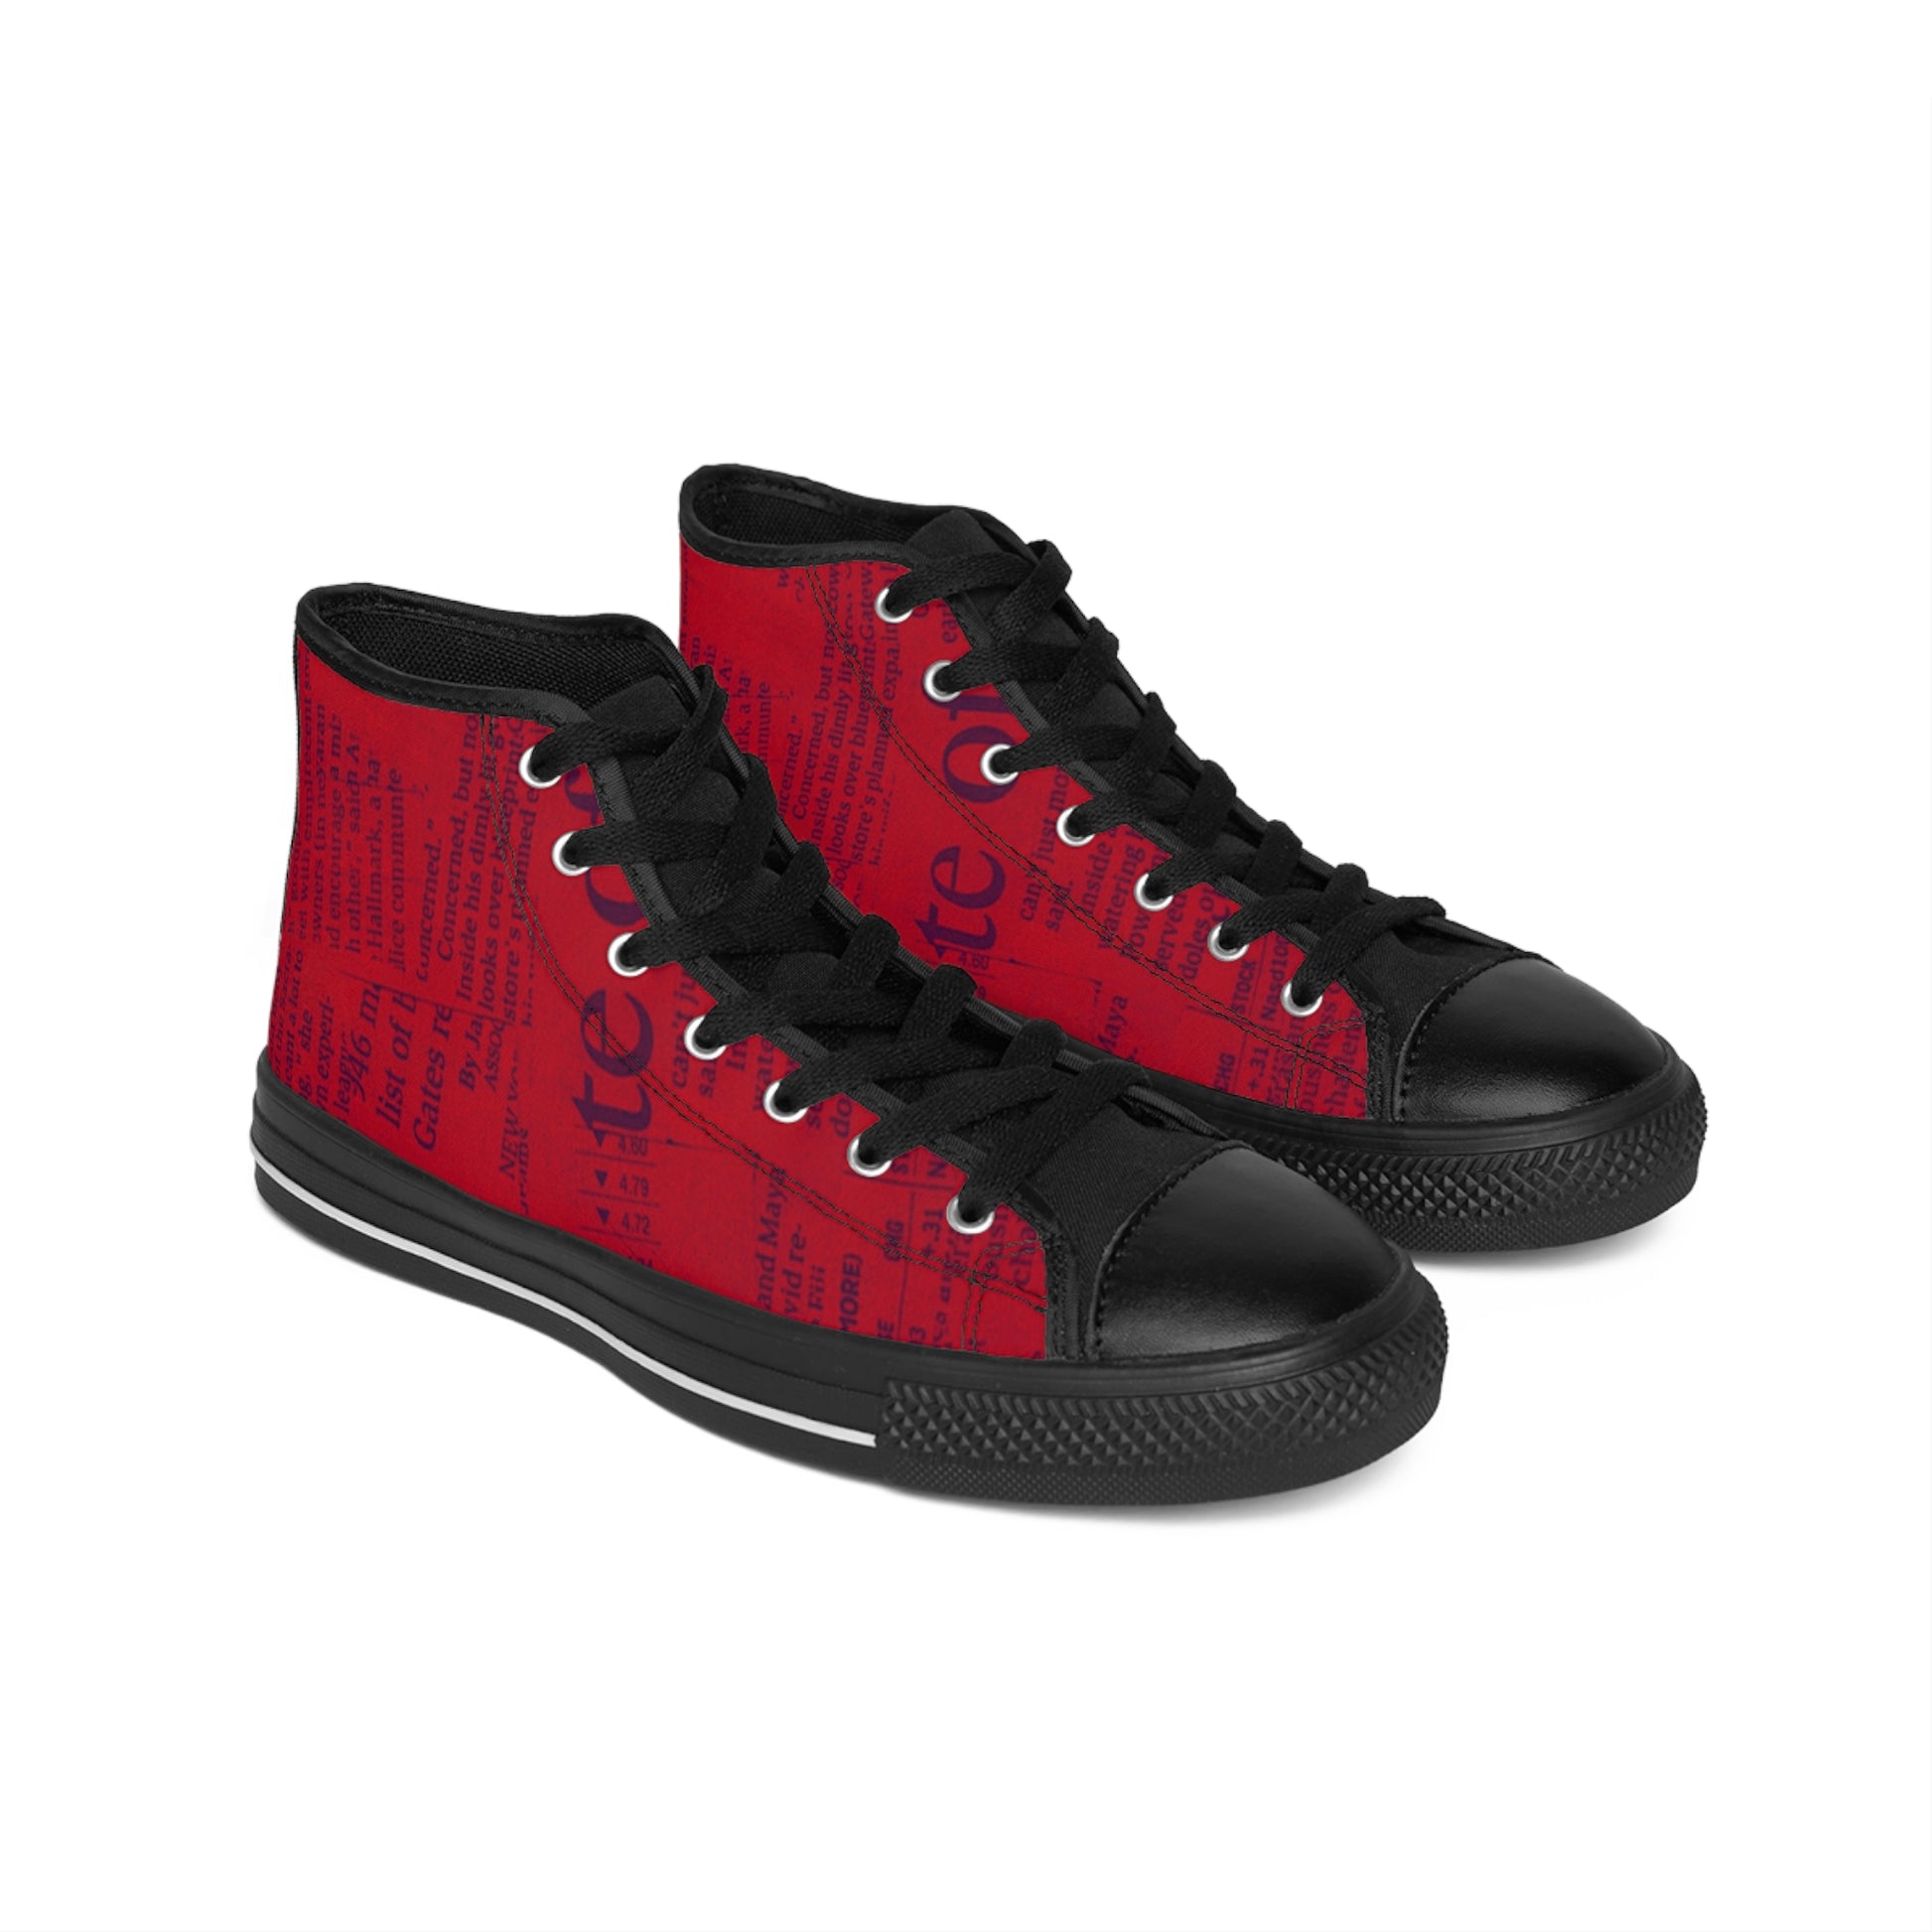 IAKAM Classic Sneakers Vintage Red - IAKAM